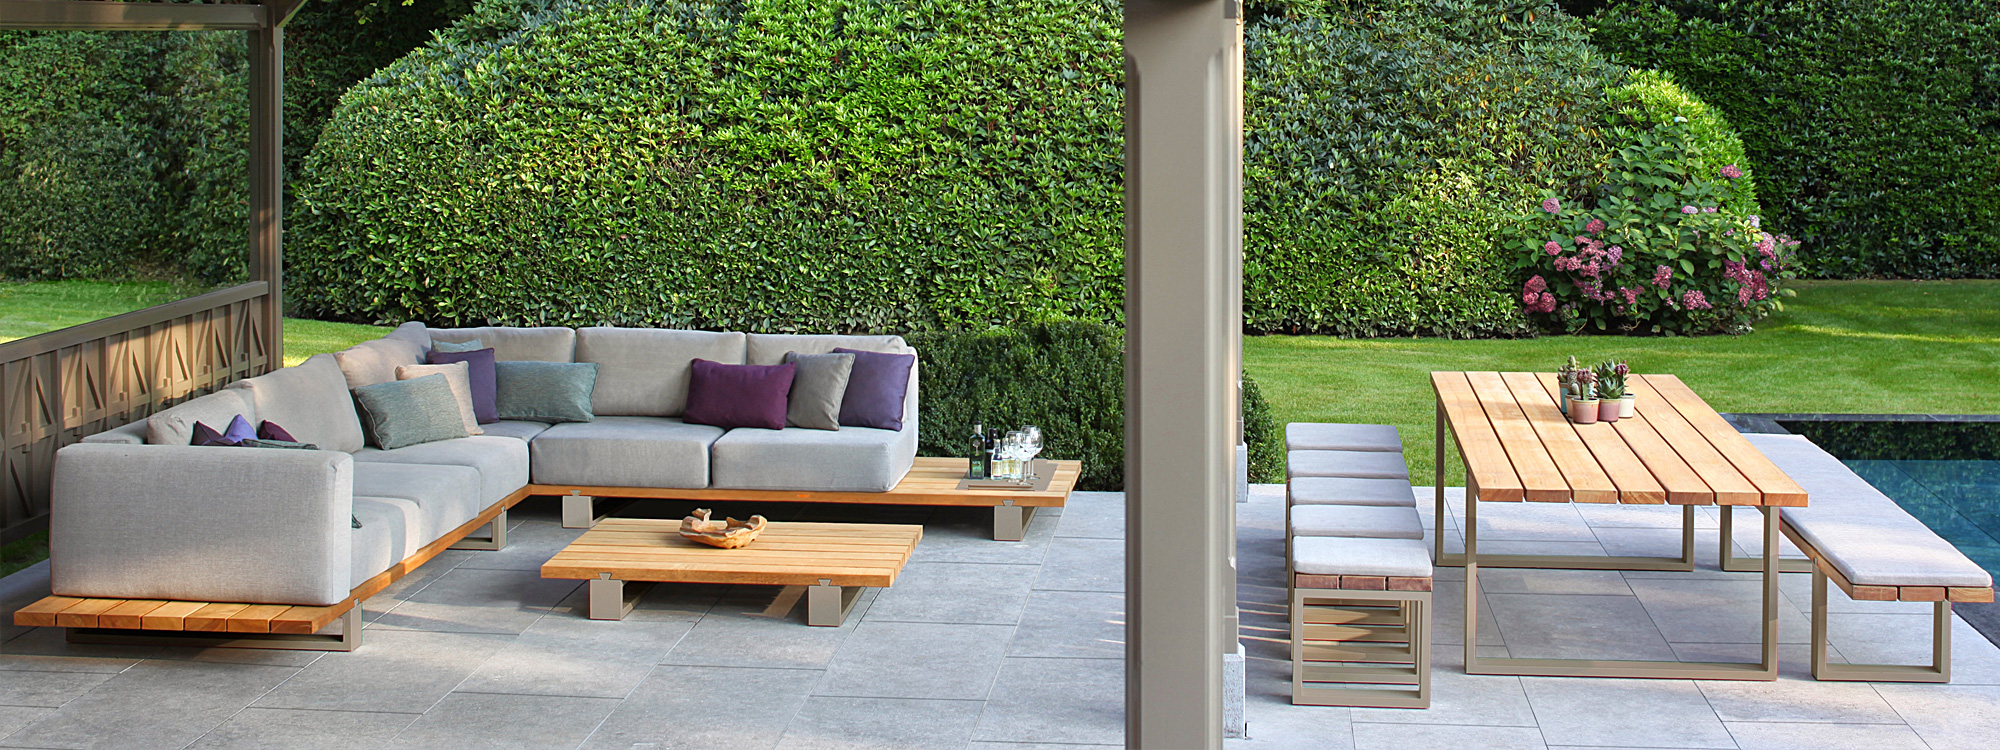 Image of Vigor Lounge outdoor sofa and Vigor dining table and benches by Royal Botania